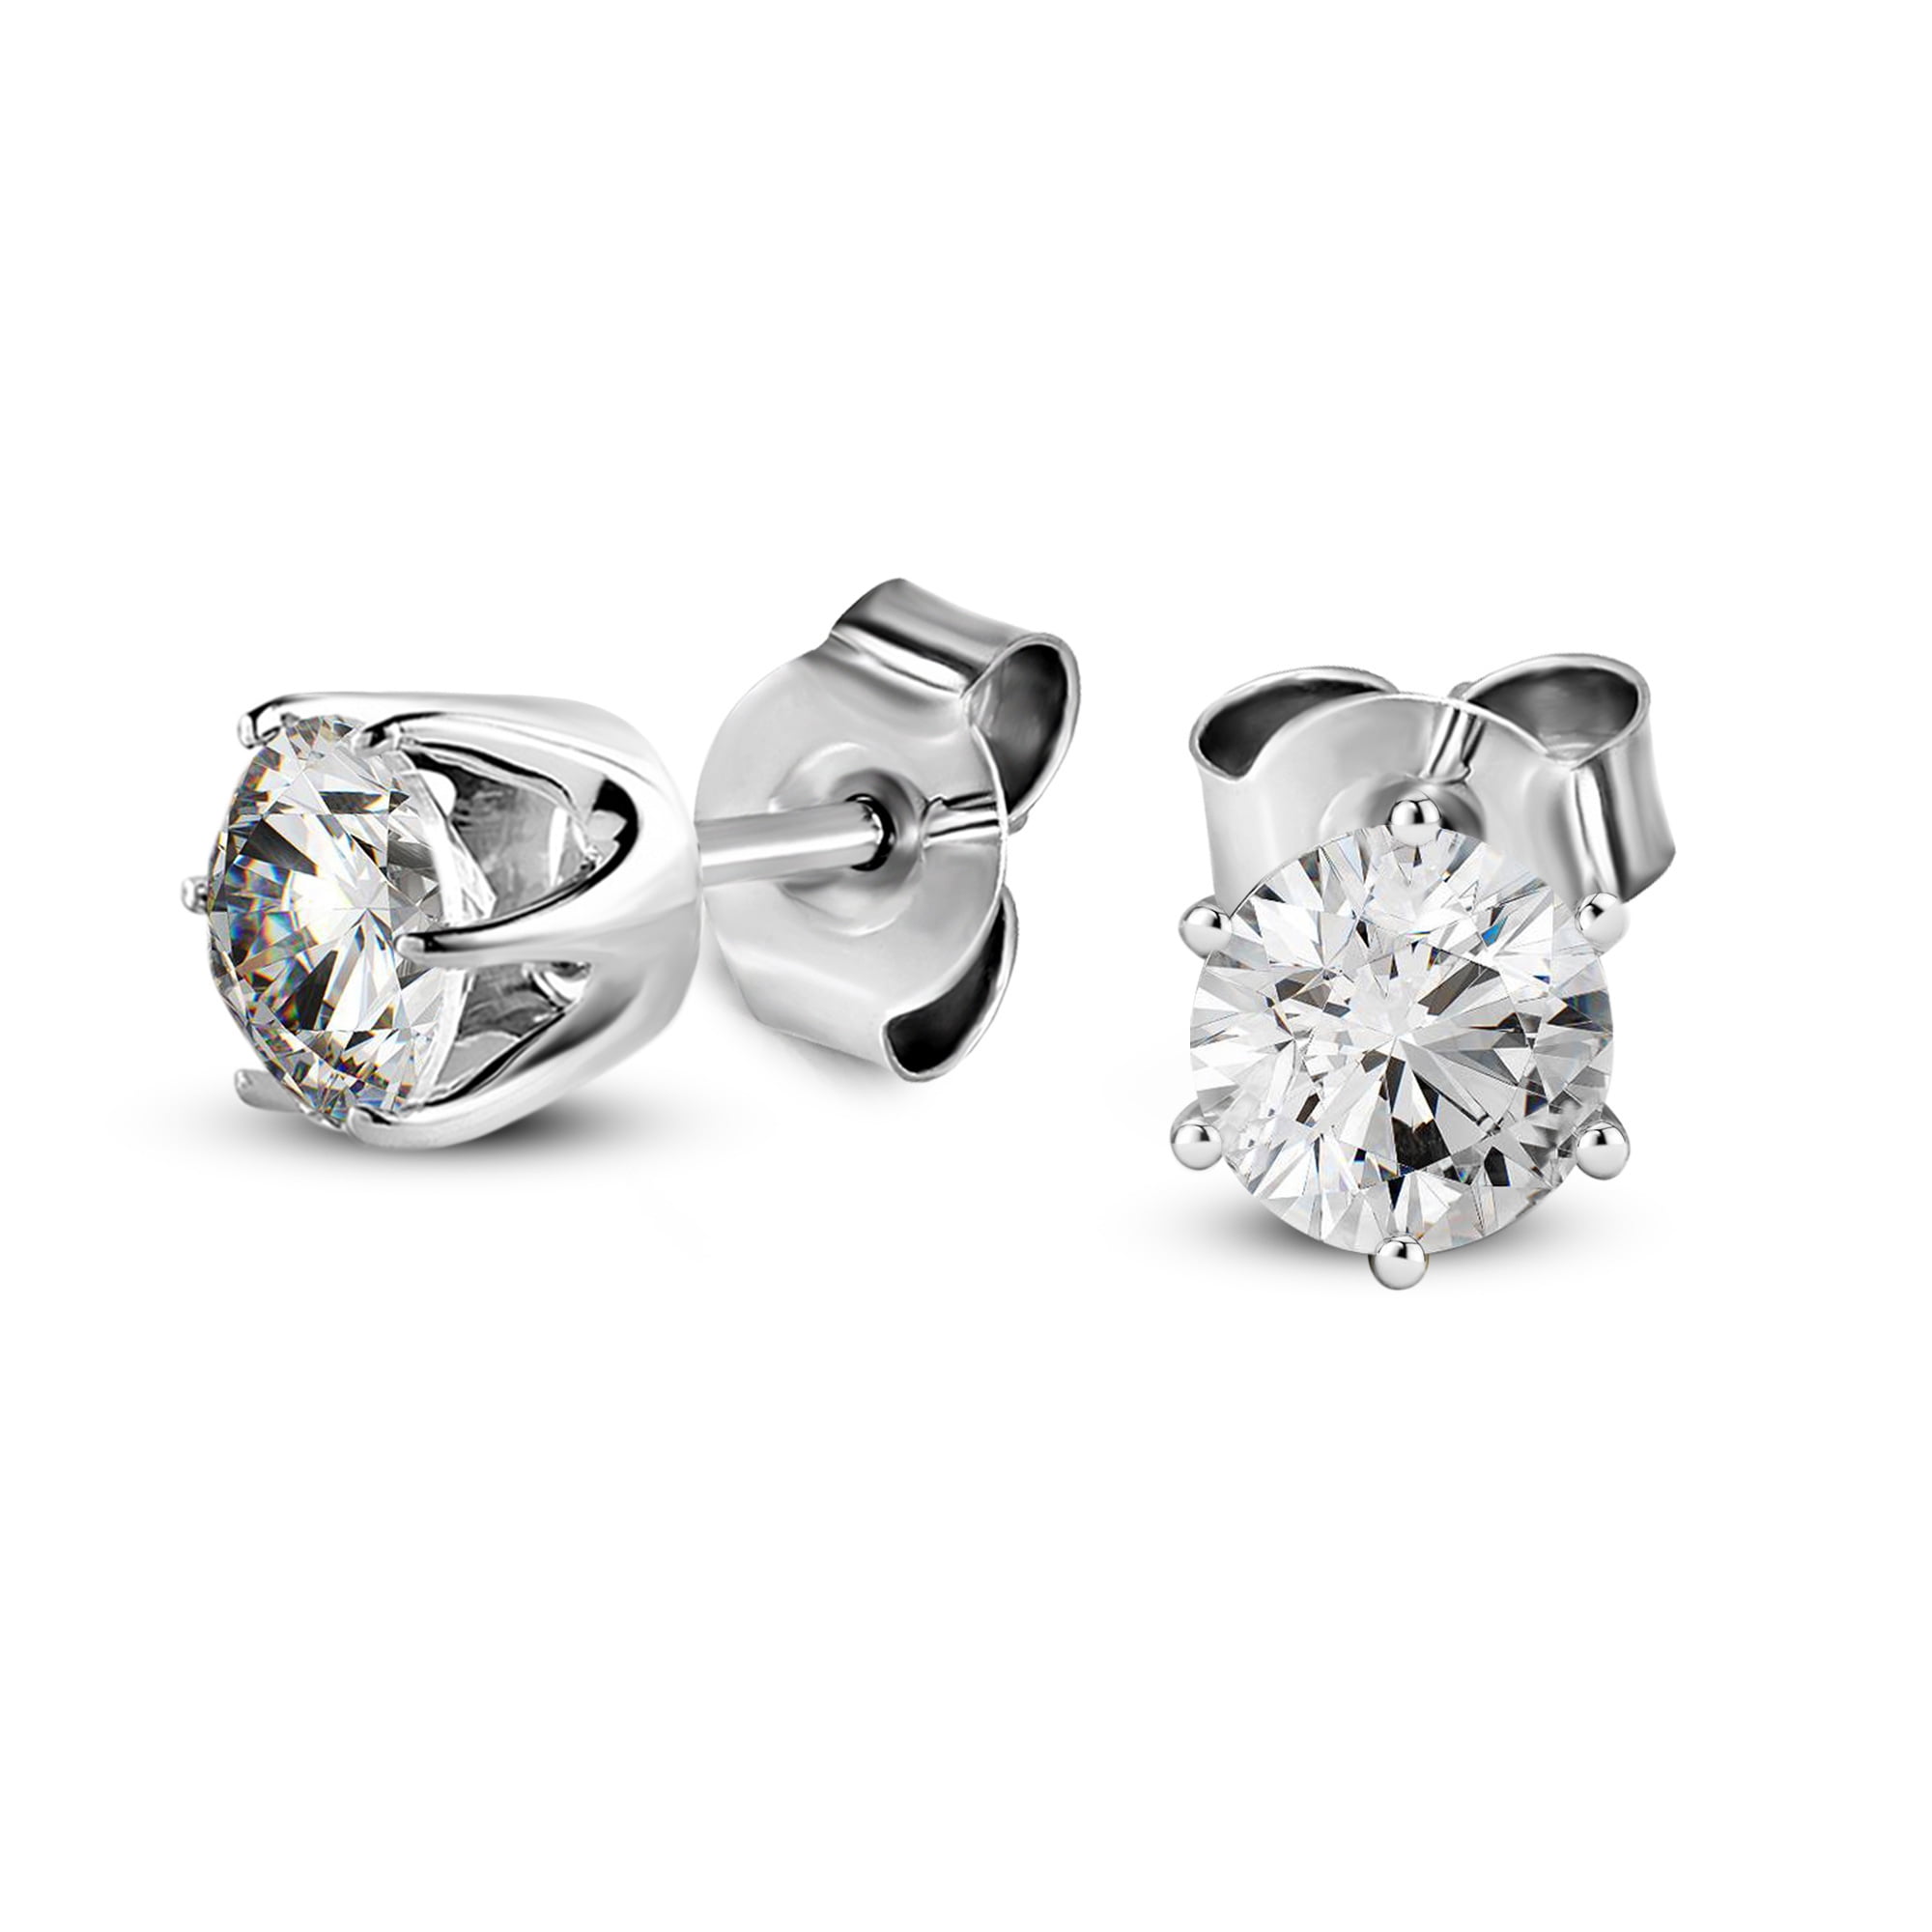 1 3 4 Carat Lab Grown Diamond Earrings IGI Certified Round Shape Solitaire Stud 6 Prong F G Color VS1 VS2 Clarity 14K White Gold Friendly Diamonds ca3d8a4e adc8 49f6 af4a d37fb2035804.b686e7e2edd60be2e0e7374f7b36ba07